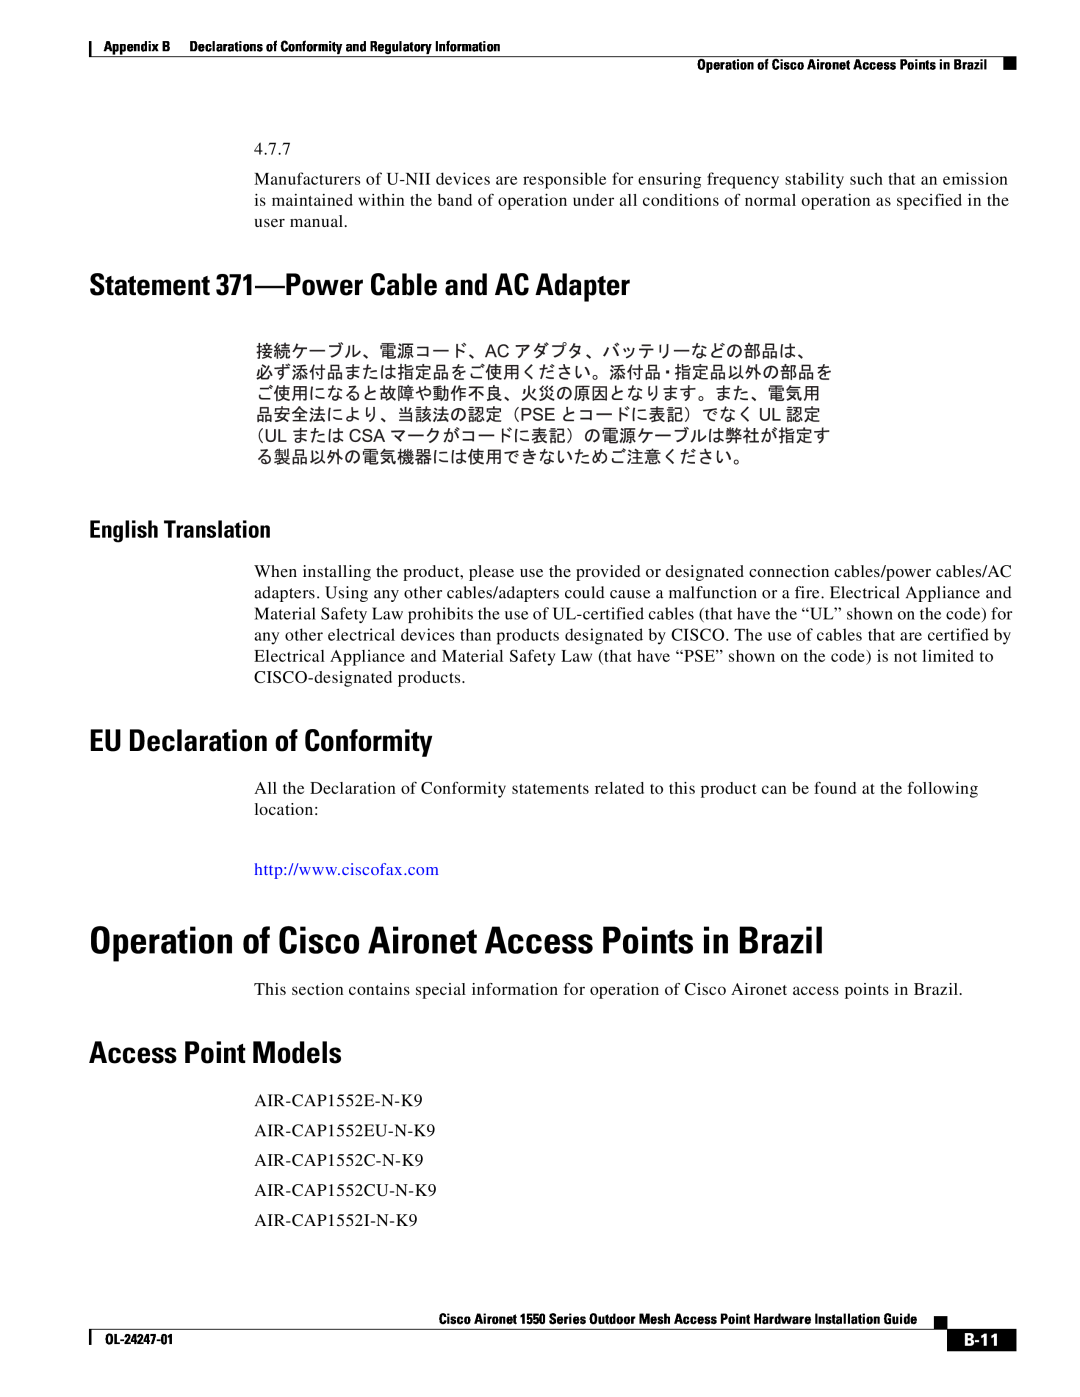 Cisco Systems AIRCAP1552EAK9RF Operation of Cisco Aironet Access Points in Brazil, EU Declaration of Conformity, B-11 